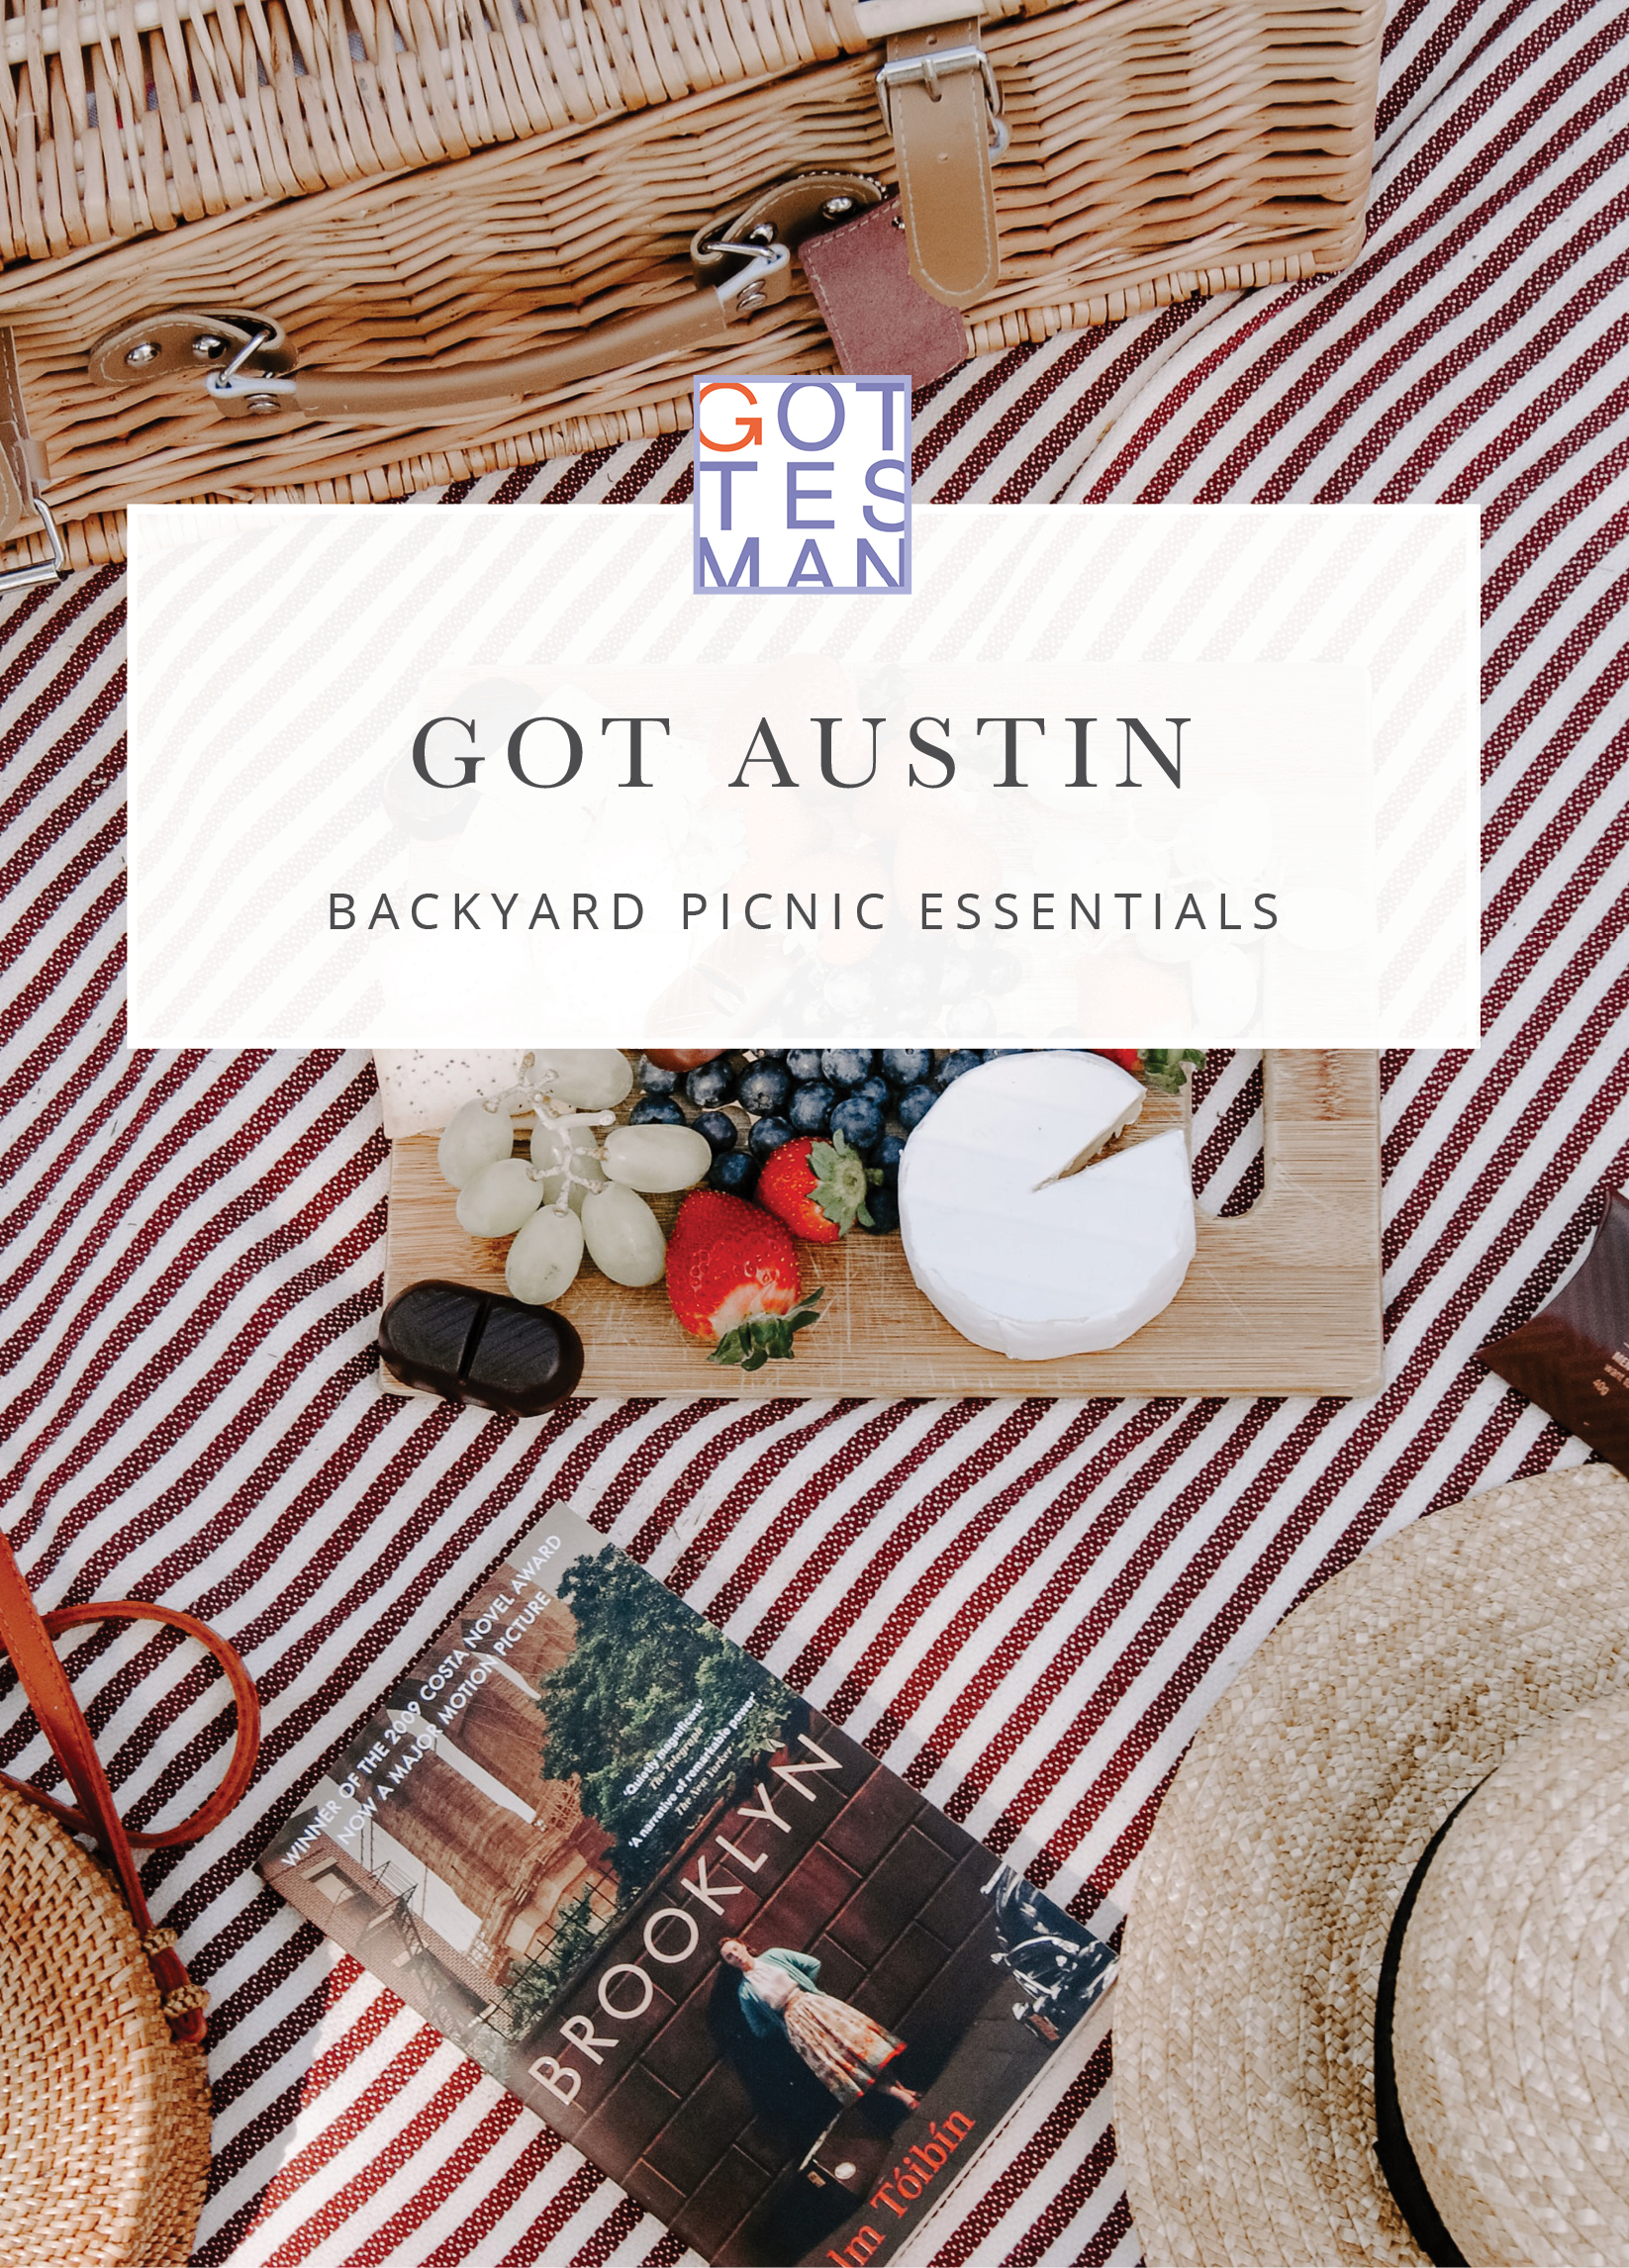 Picnic with text overlay, "Got Austin: Backyard Picnic Essentials"